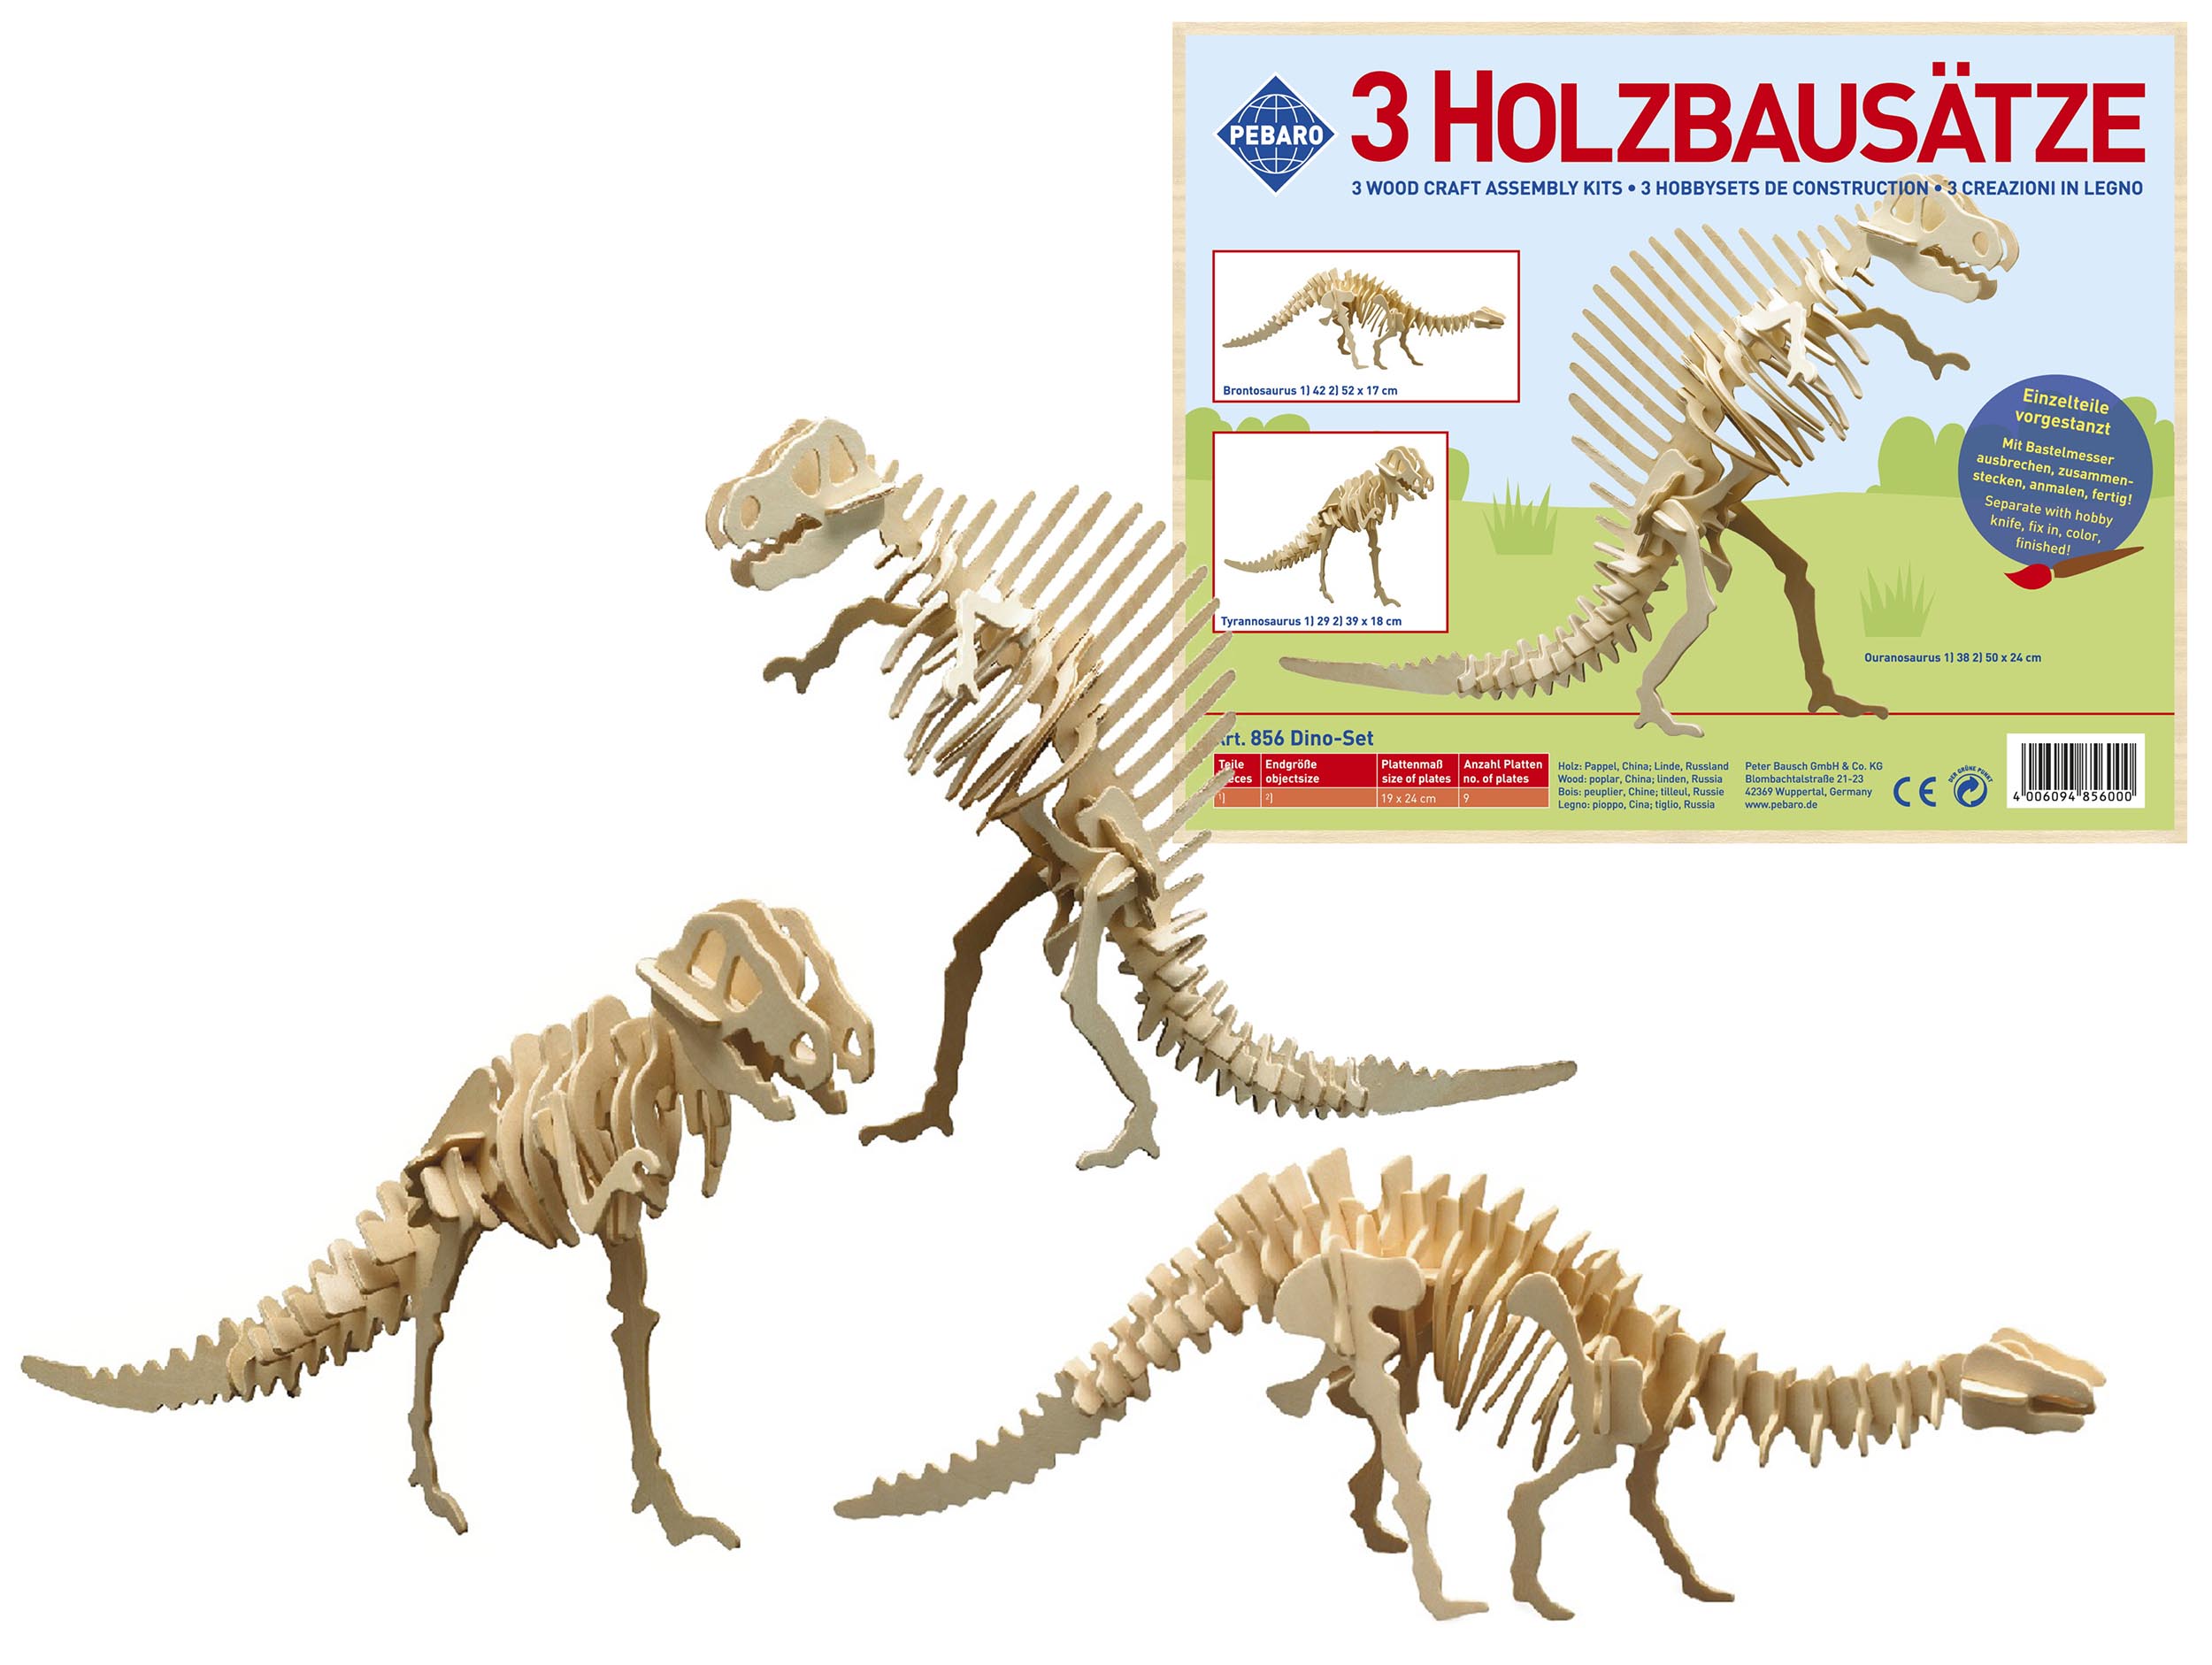 Pebaro Holzbausatz Dinosaurier-Set.